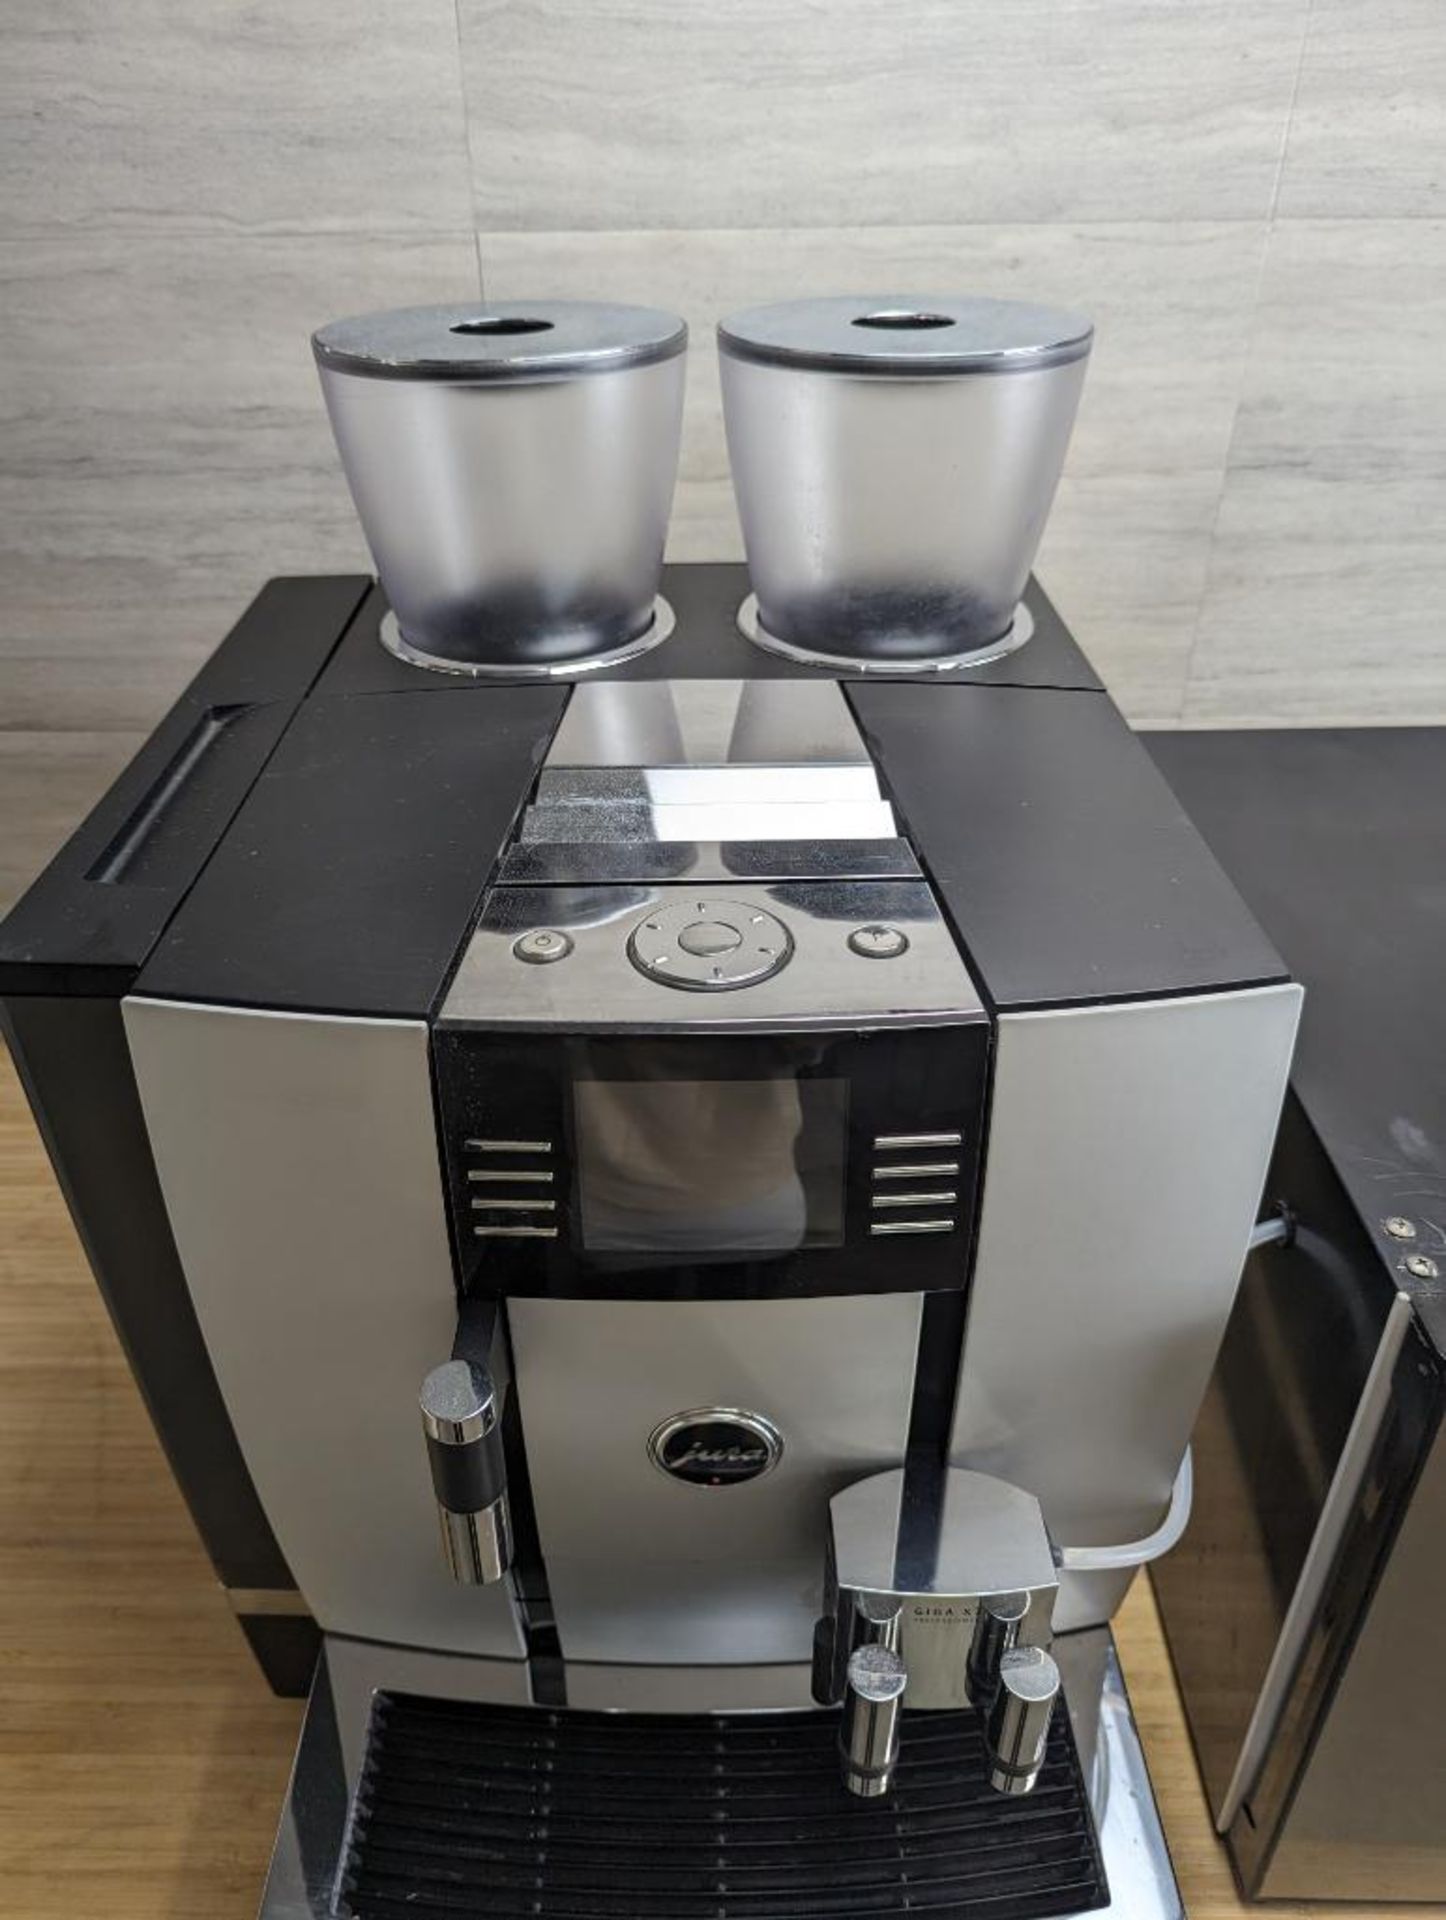 JURA GIGA X7 PROFESSIONAL AUTOMATIC COFFEE MACHINE WITH MILK COOLER - Image 4 of 16